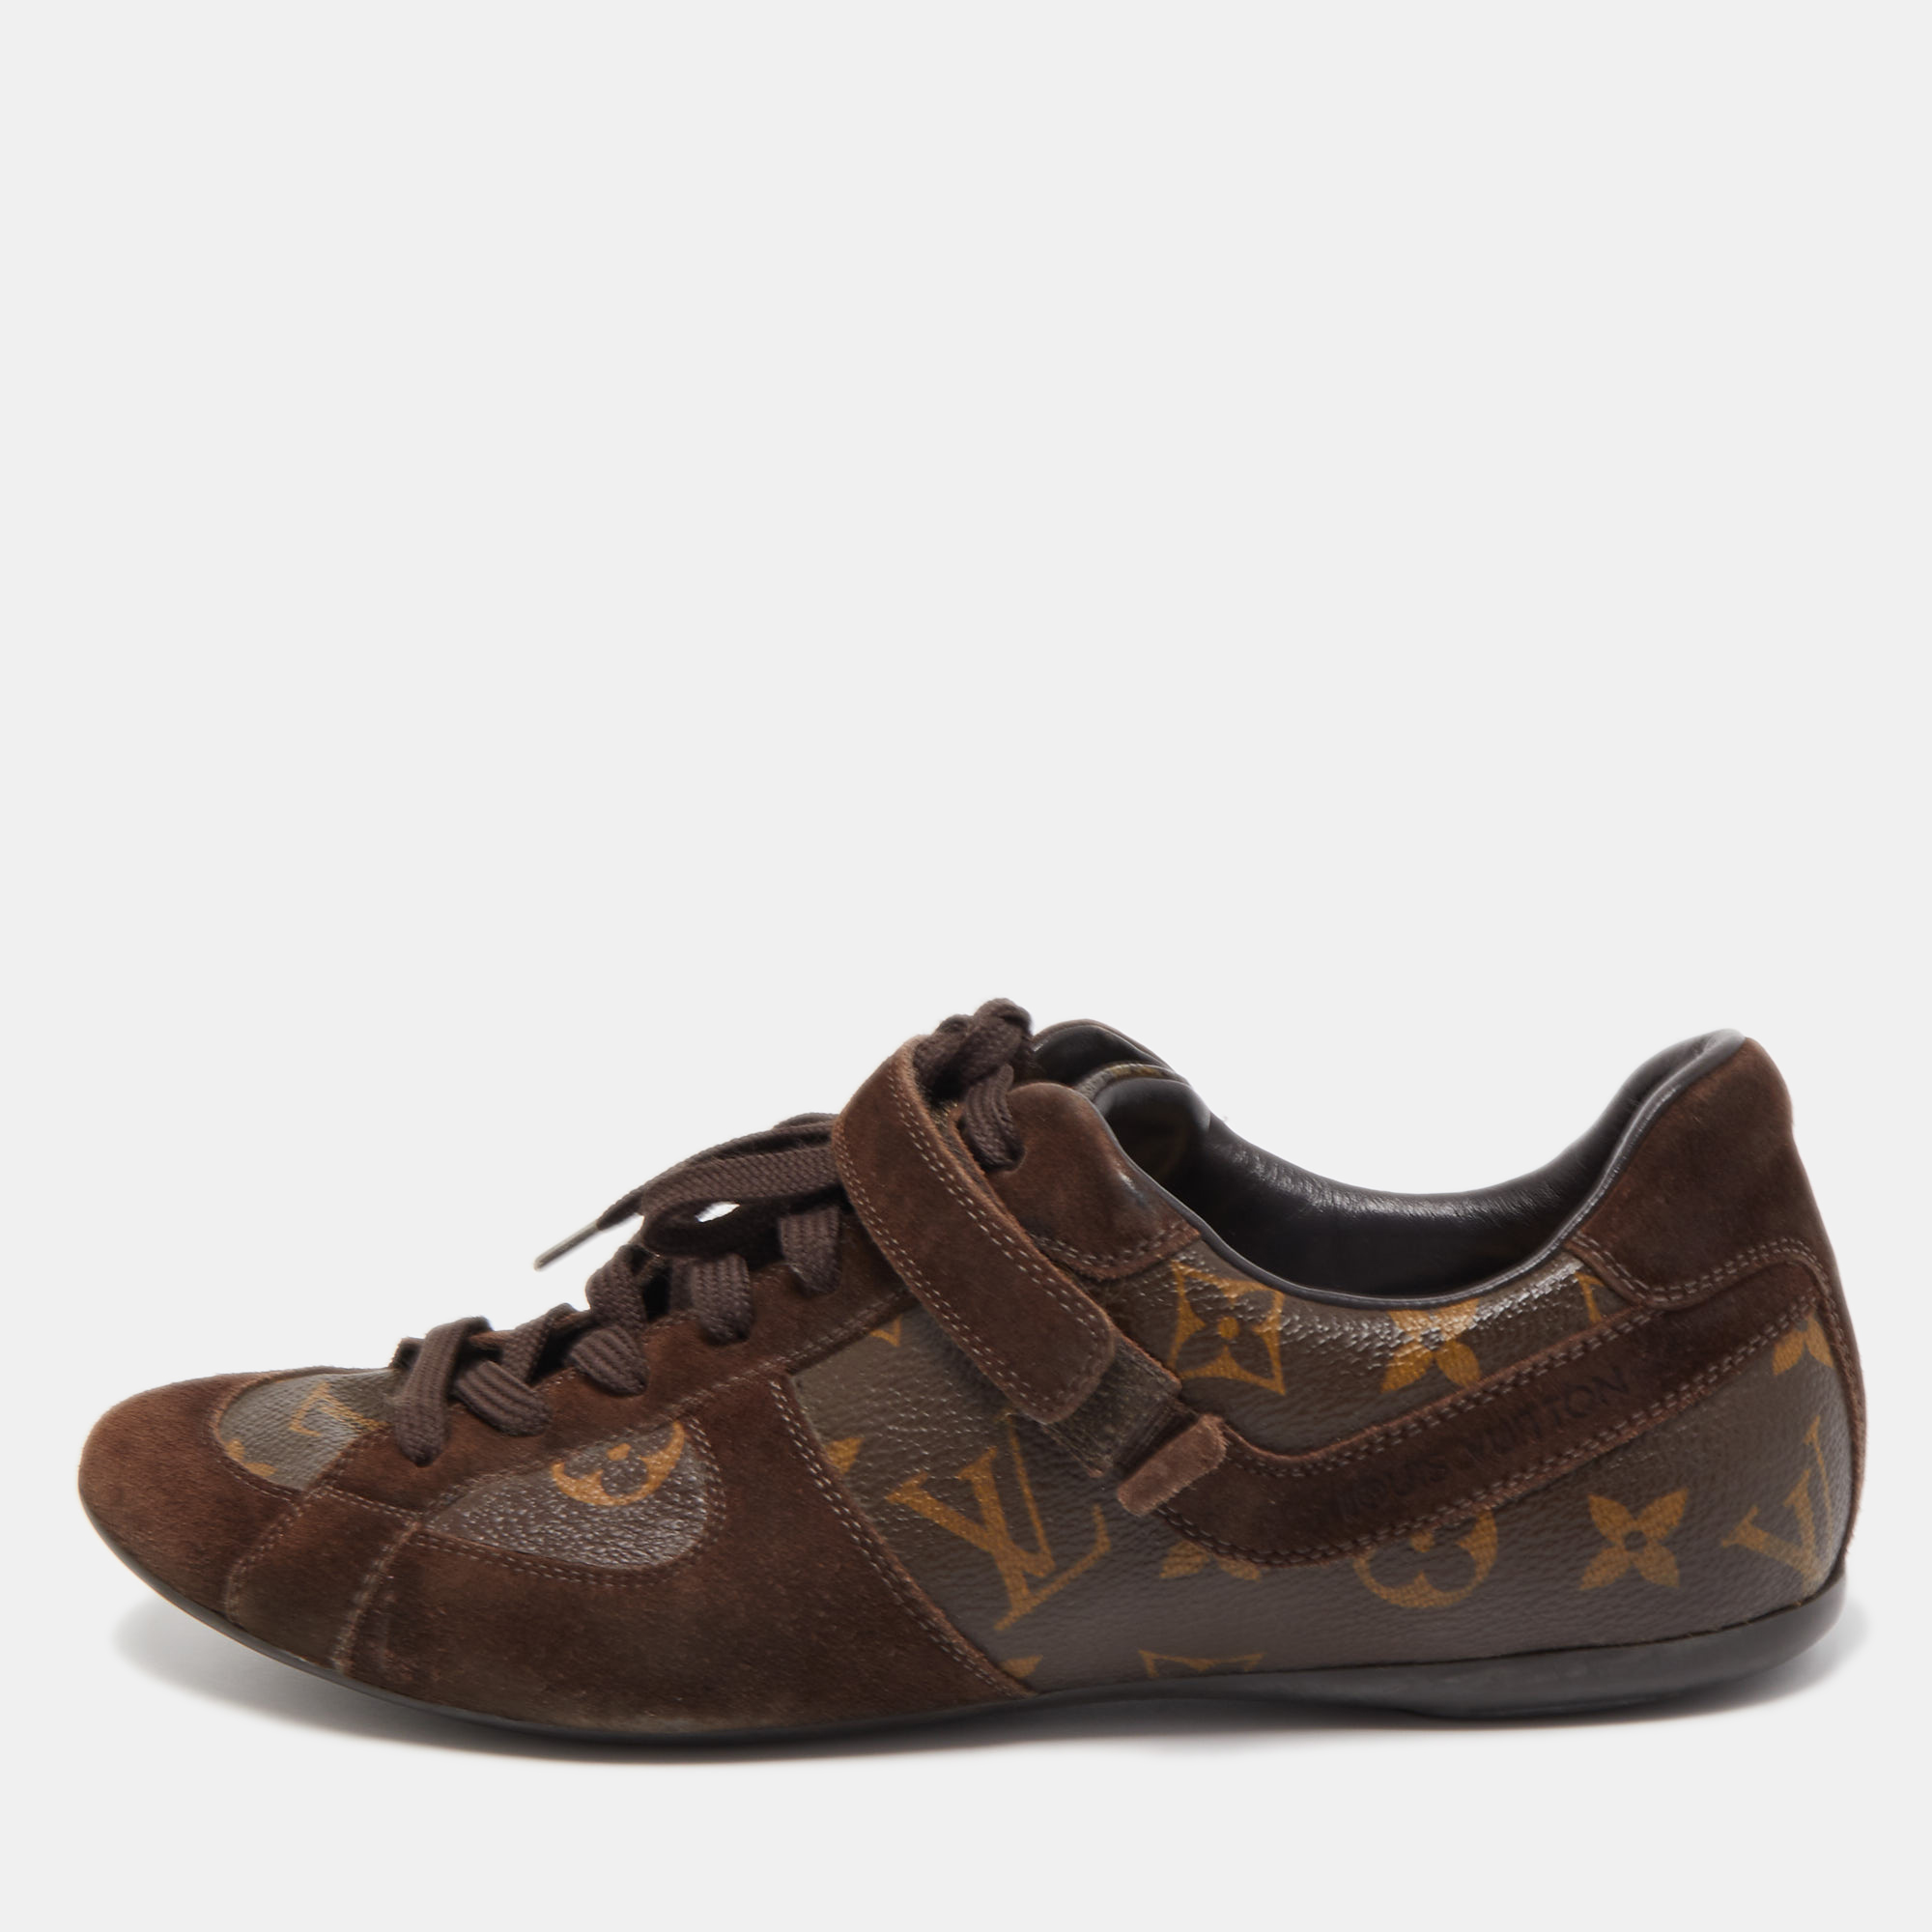 LOUIS VUITTON LOUIS VUITTON Sandals shoes leather Brown Used Women logo LV  size 39 1/2